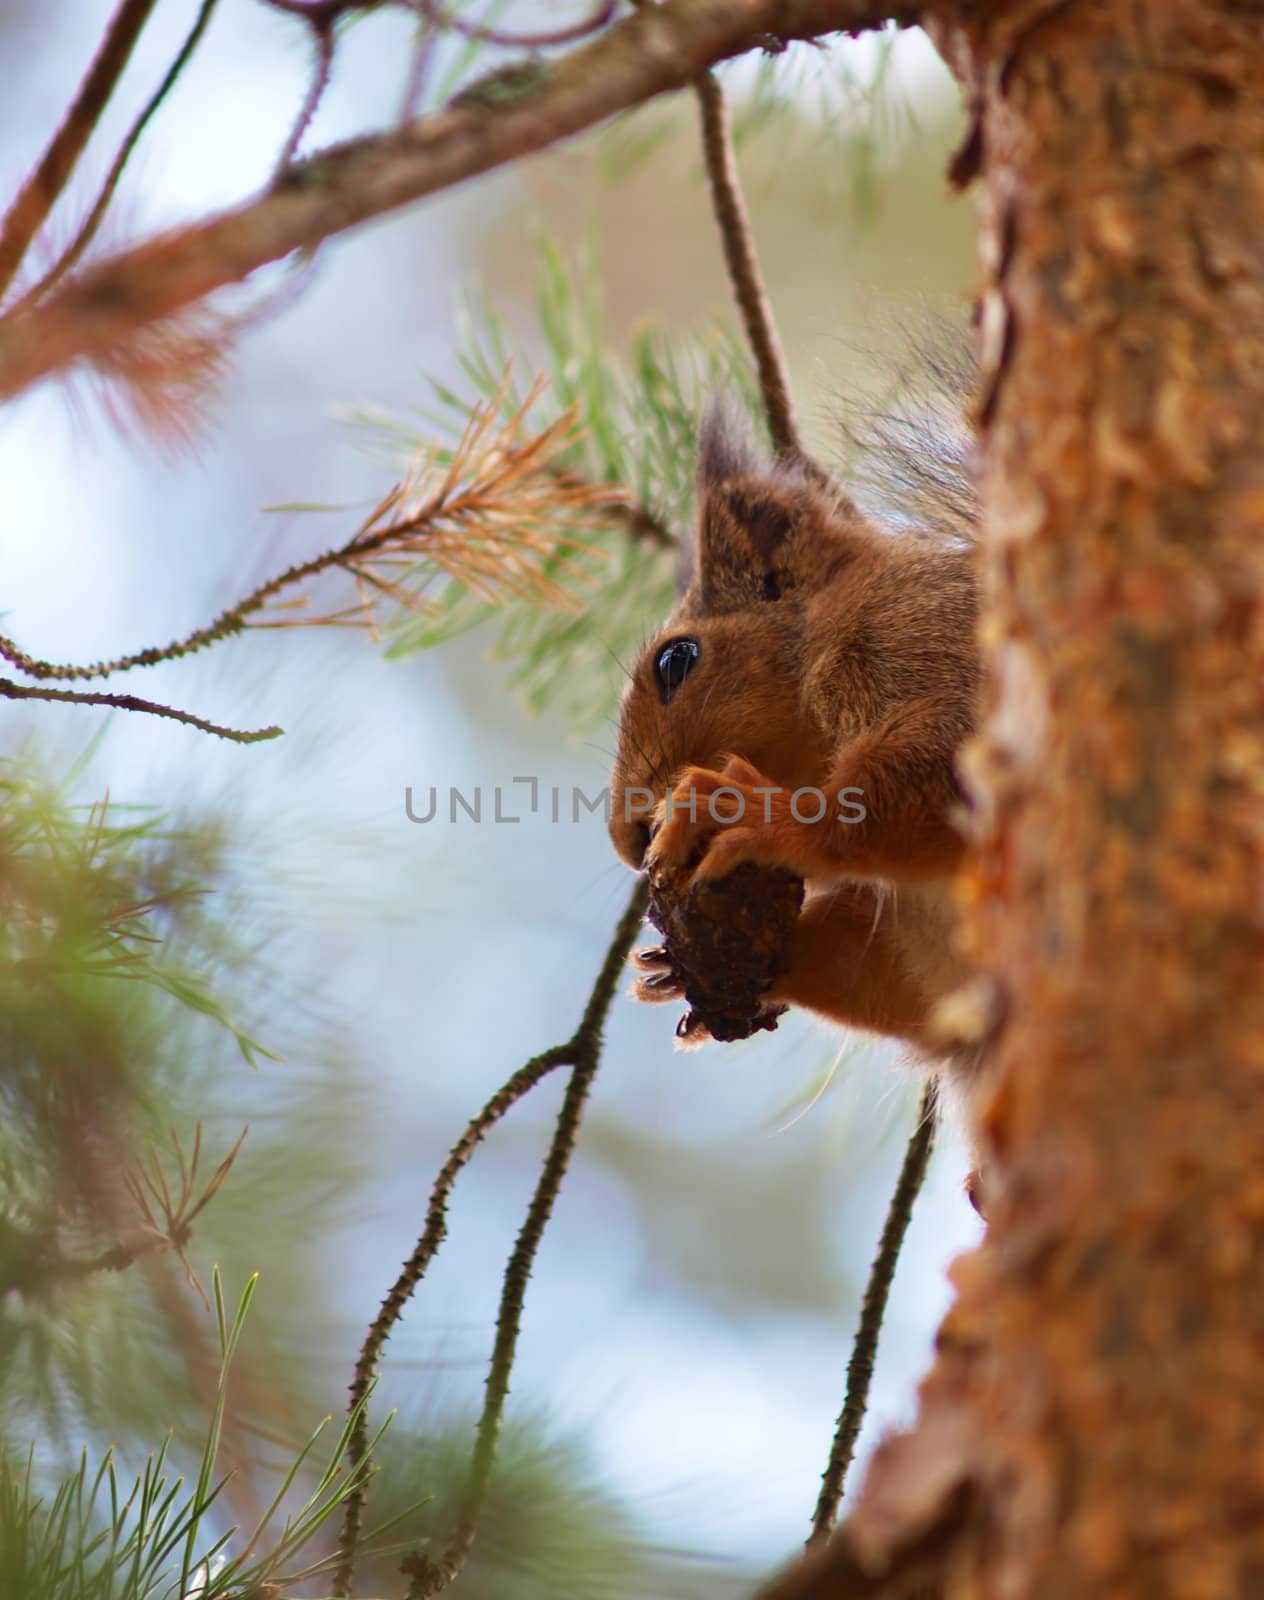 Squirrel on a tree stem, enjoying some nuts